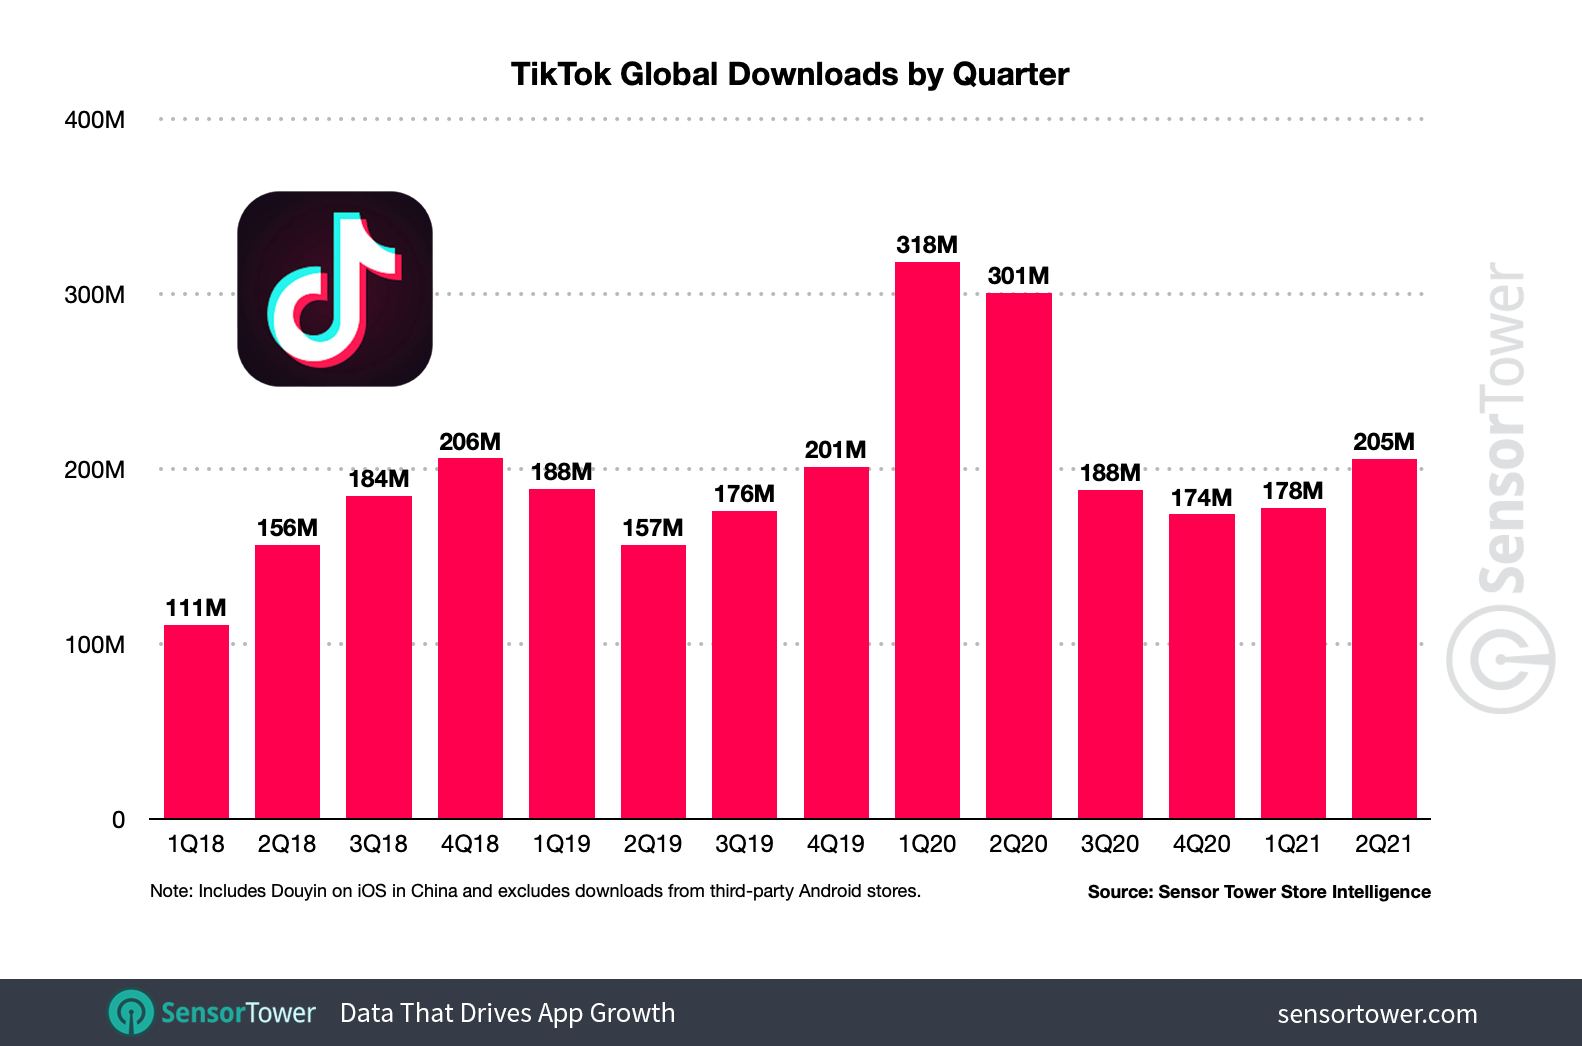 TikTok's quarterly installs climbed 16 percent in Q2 2021 to 205.4 million